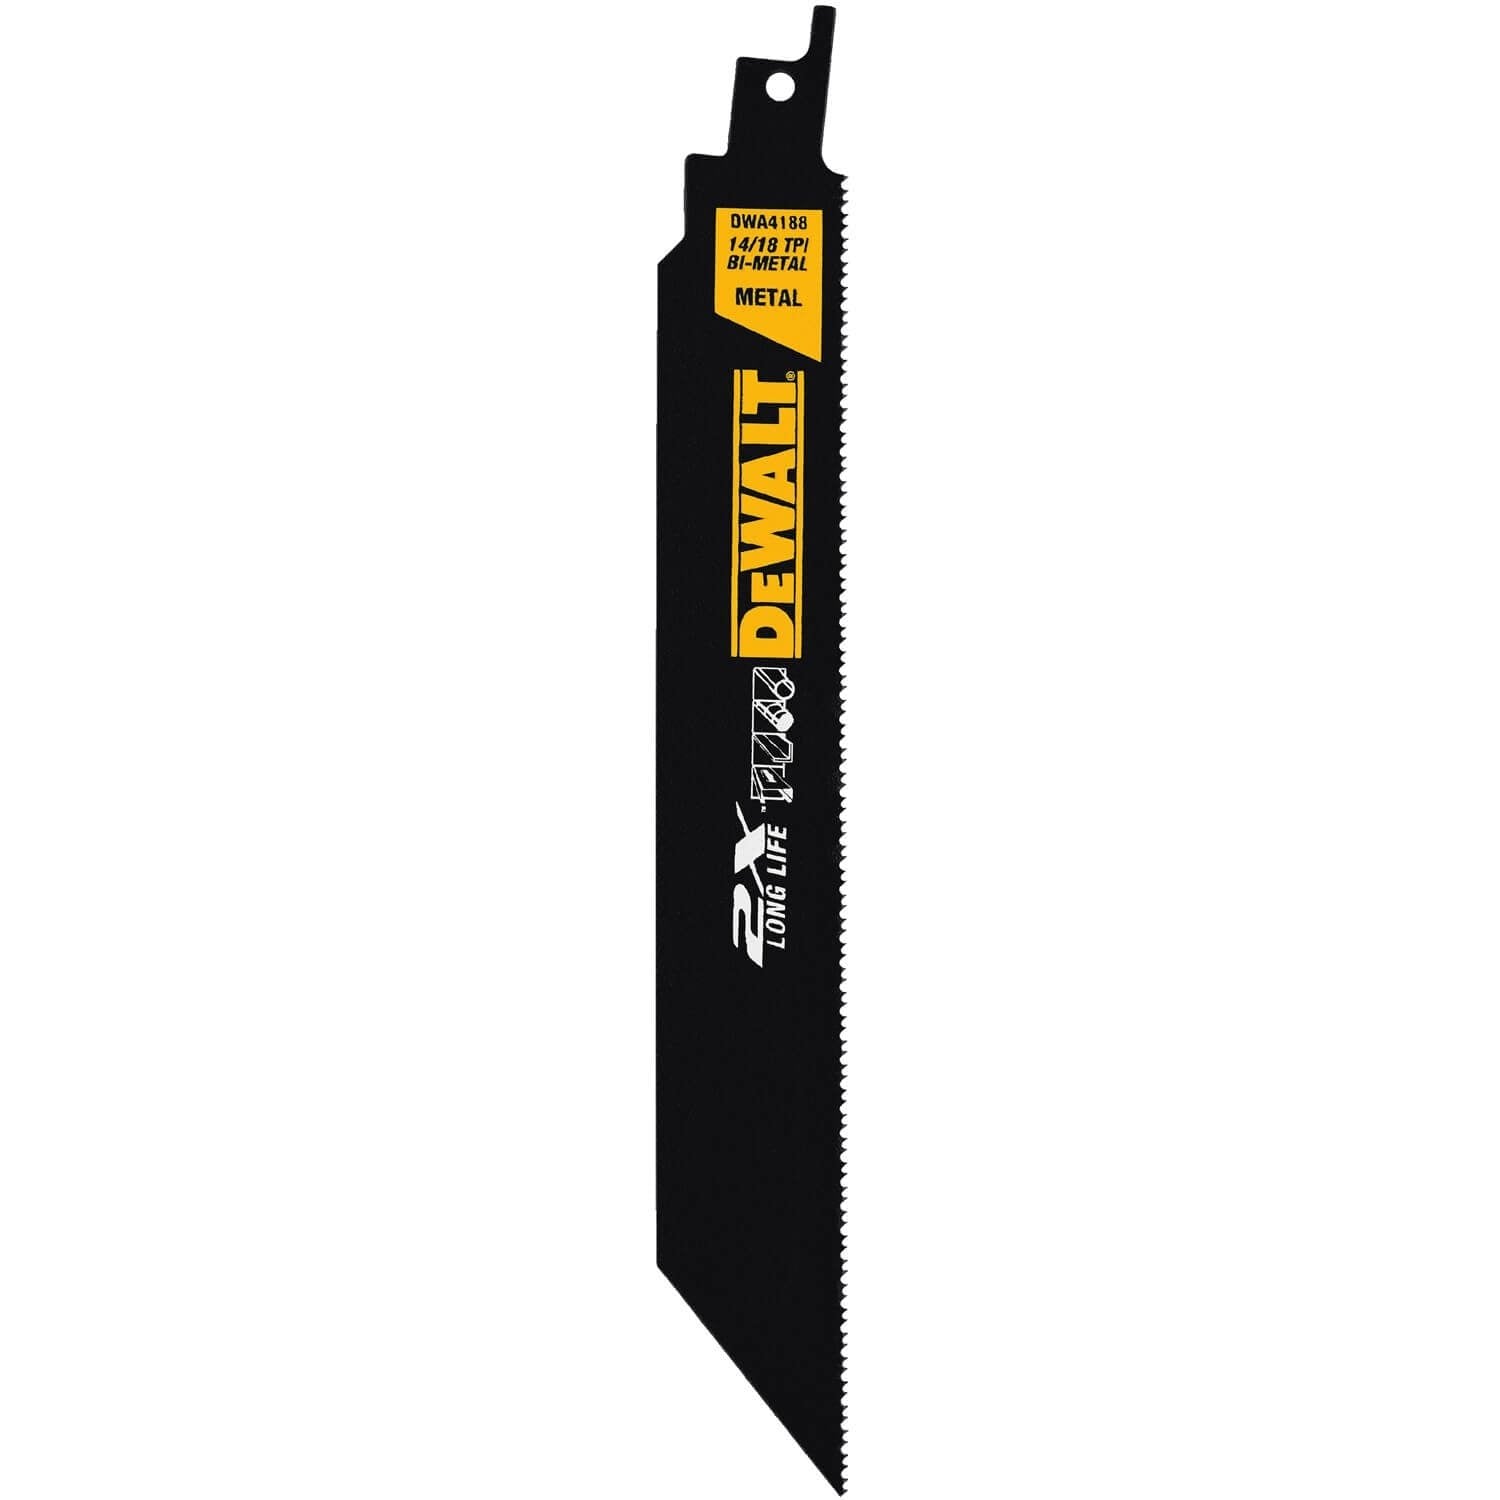 DEWALT DWA4188 - 14/18TPI Metal Cutting Recip Blade